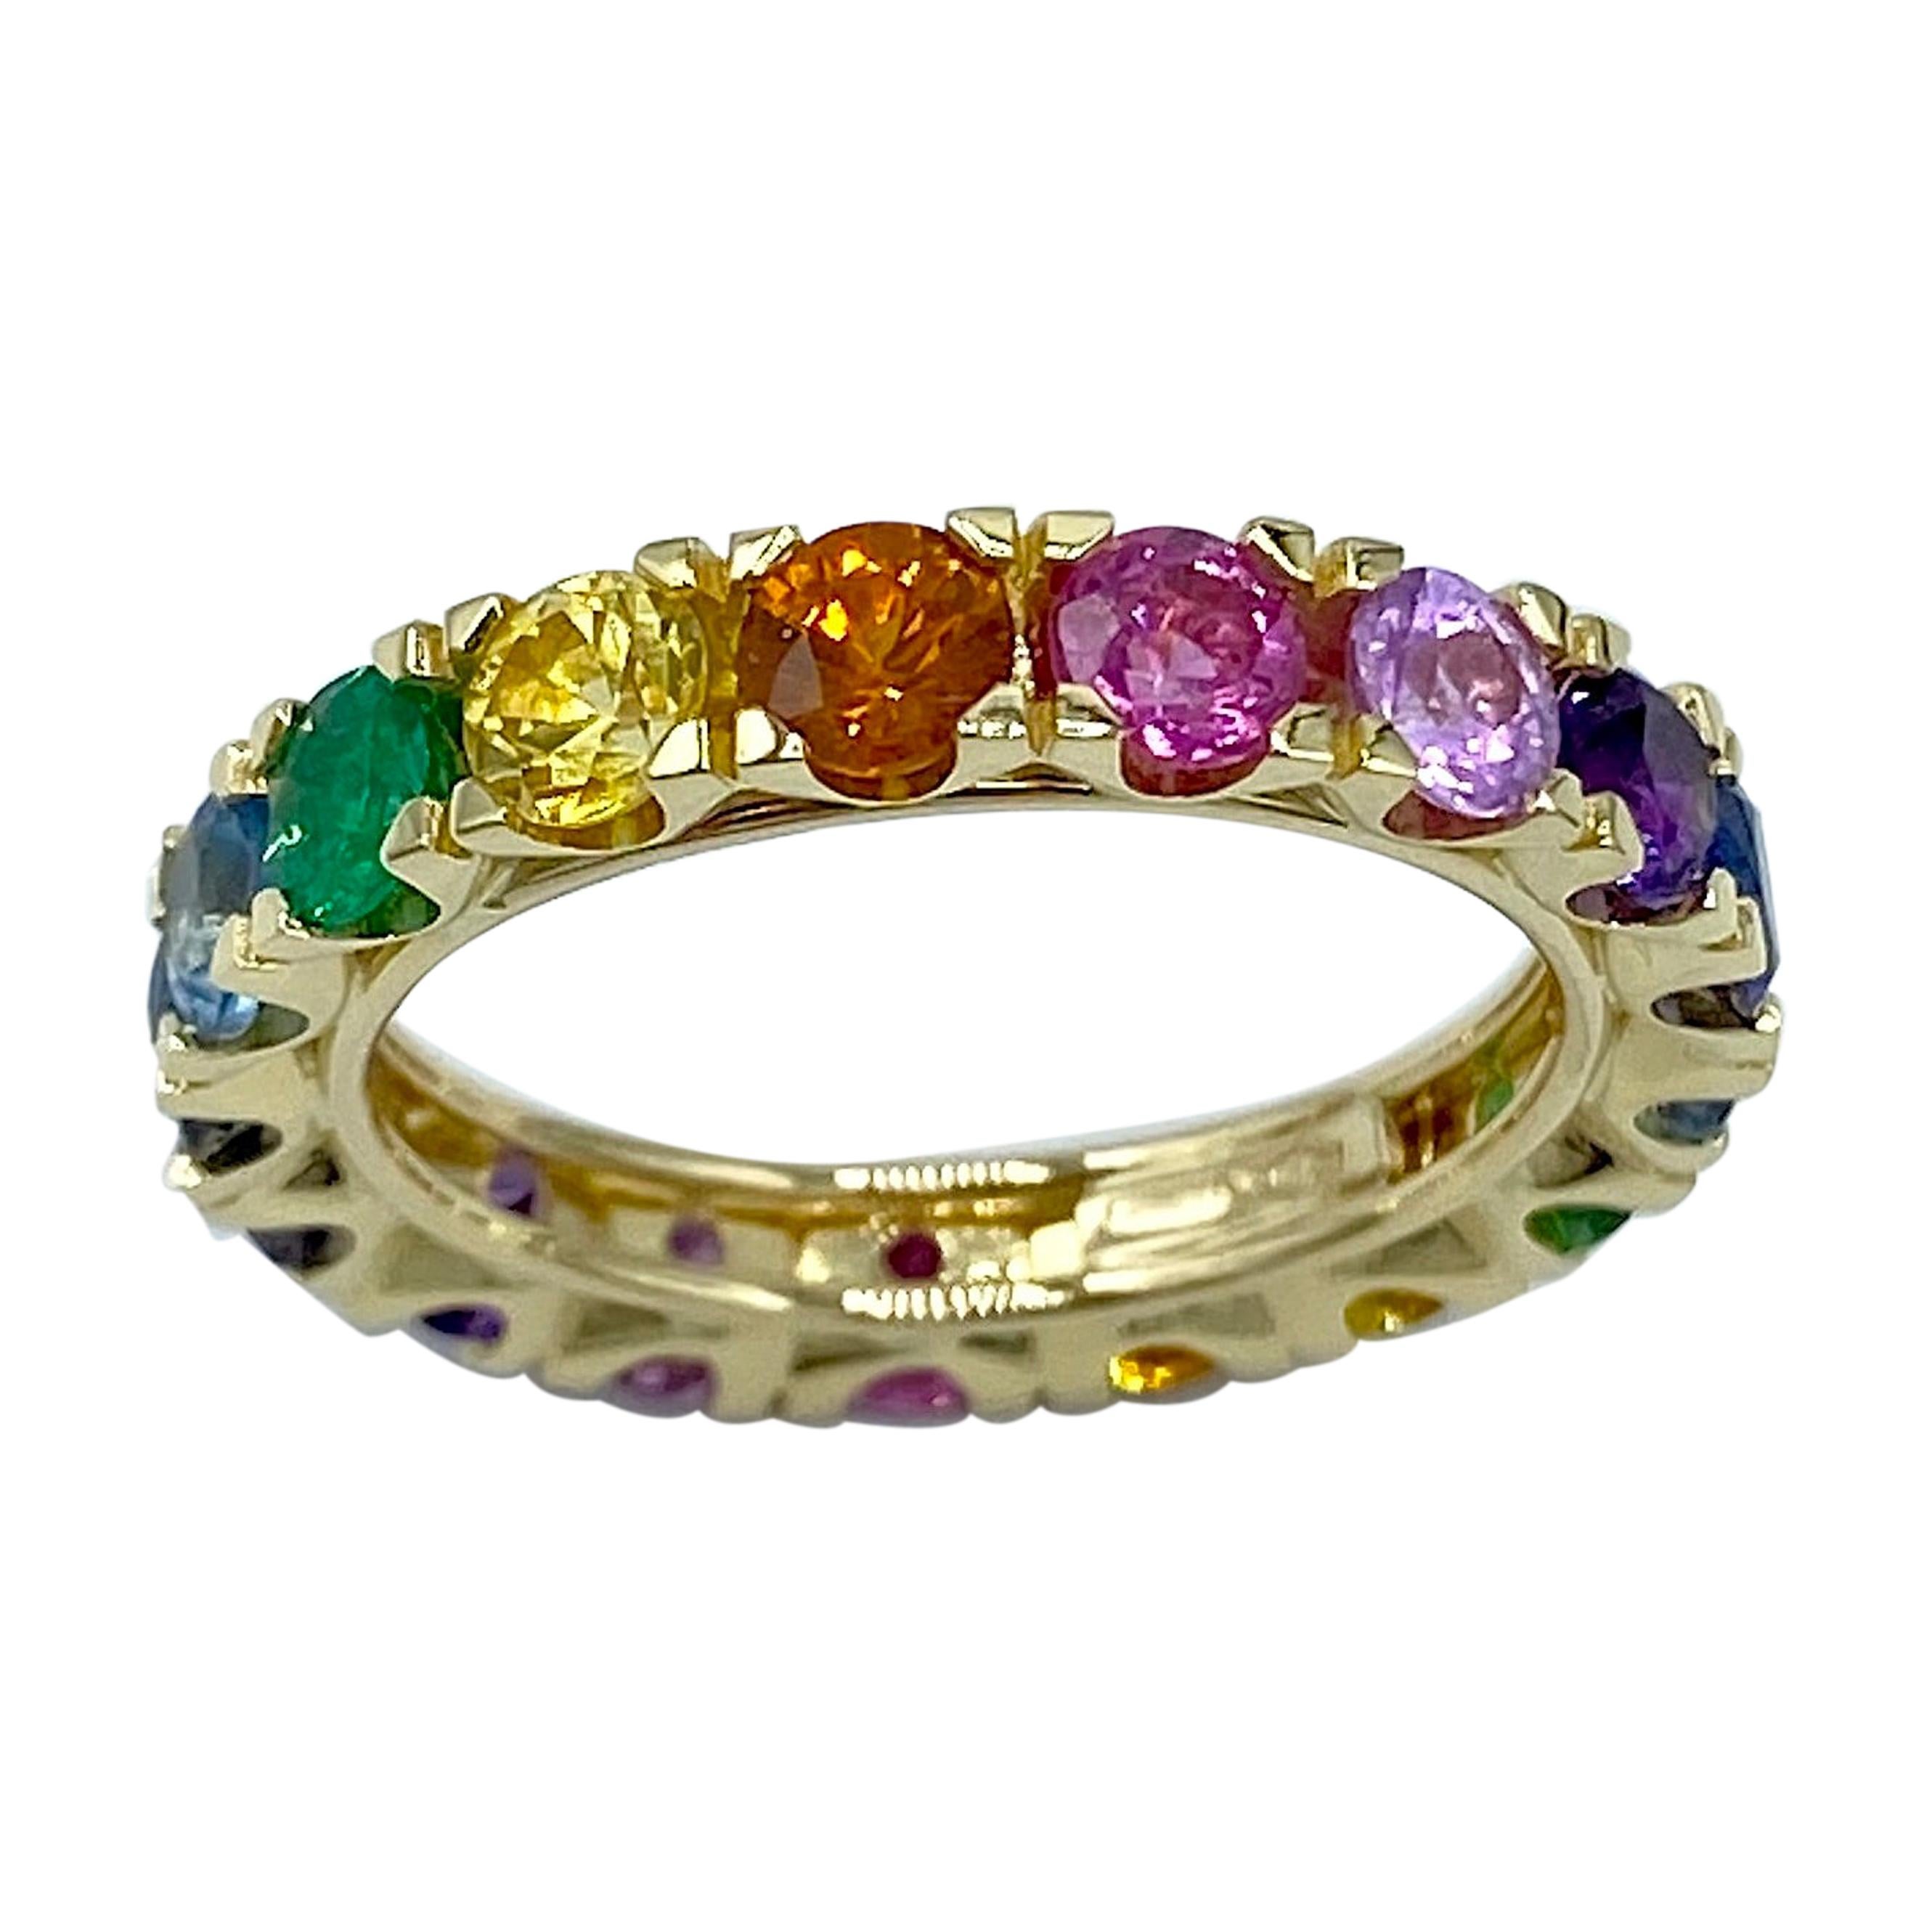 Rainbow Sapphire Emerald Semiprecious Stone 18 Karat Gold Ring Made in Italy